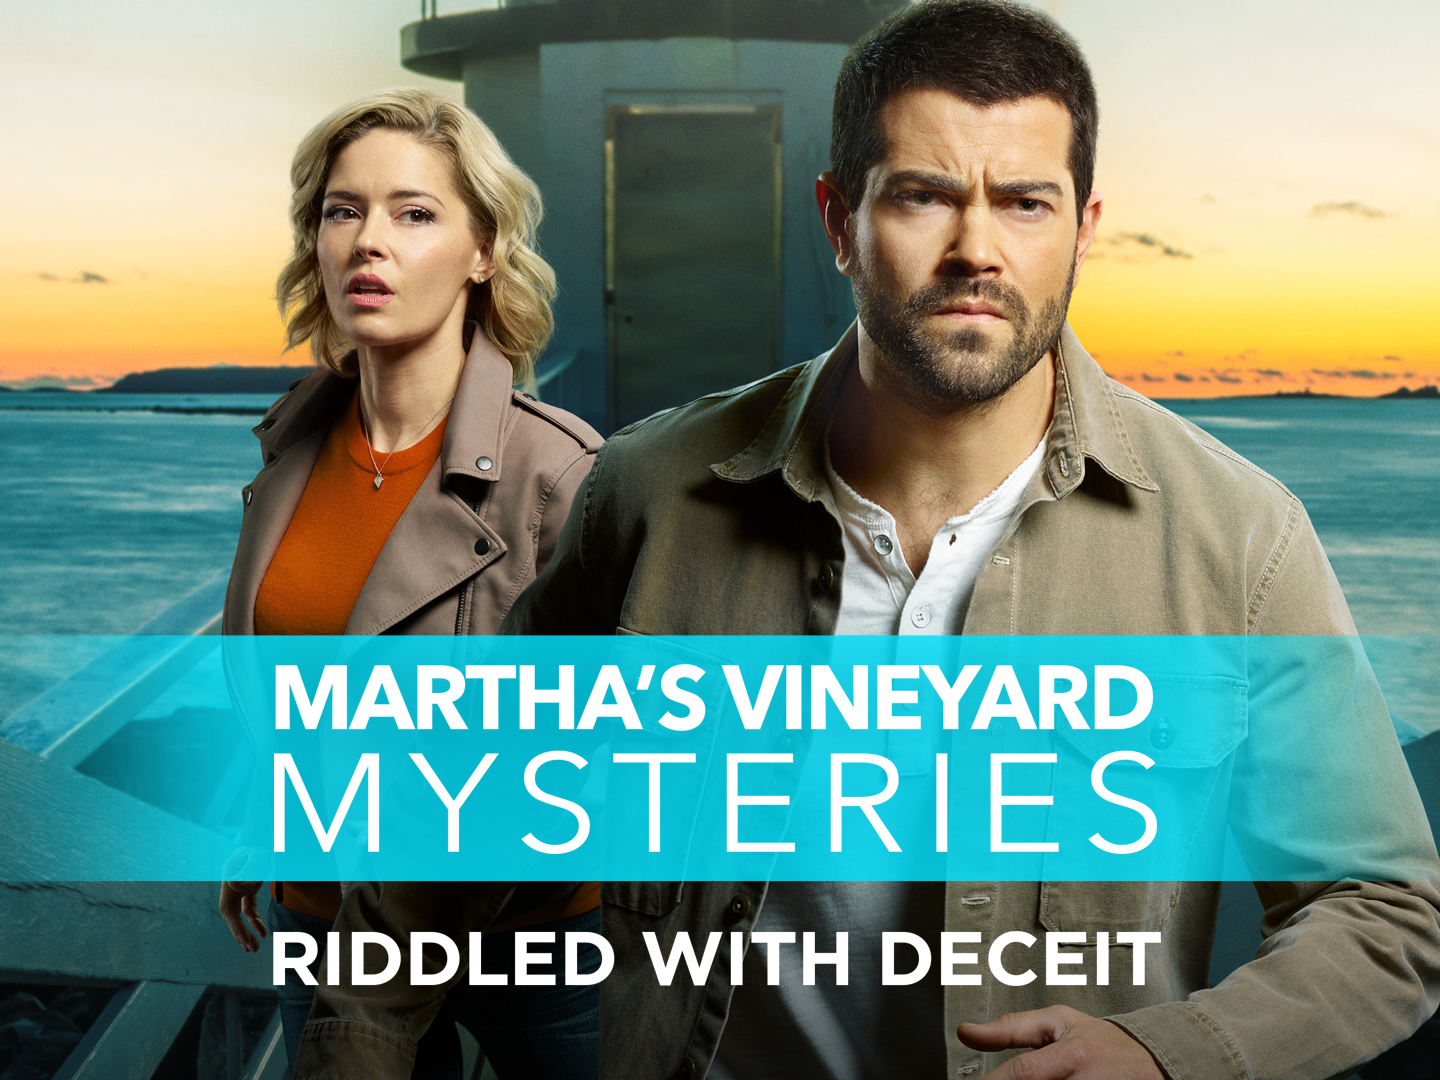 Watch Martha's Vineyard Mysteries Riddled with Deceit Online with NEON